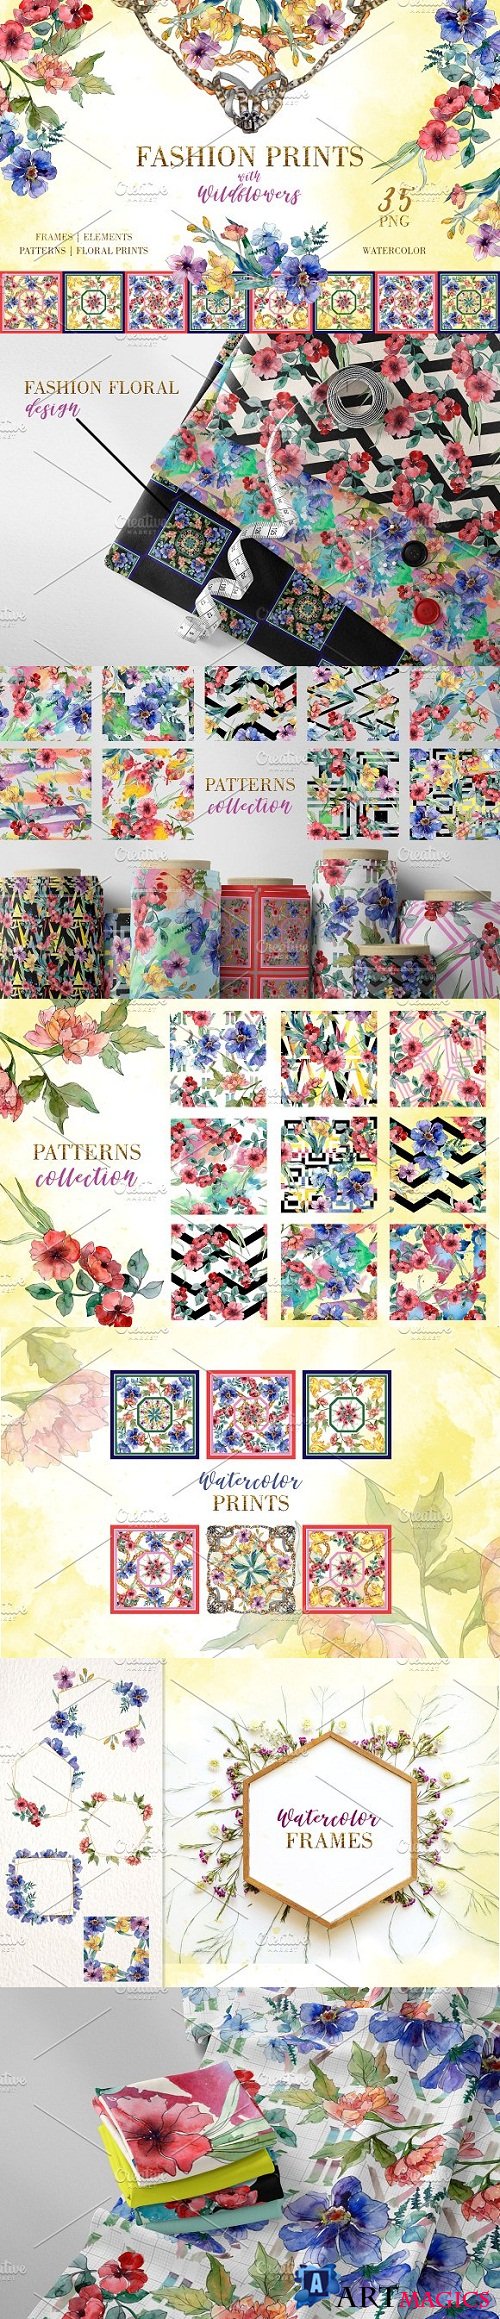 Fashion prints with Wildflowers - 3536669